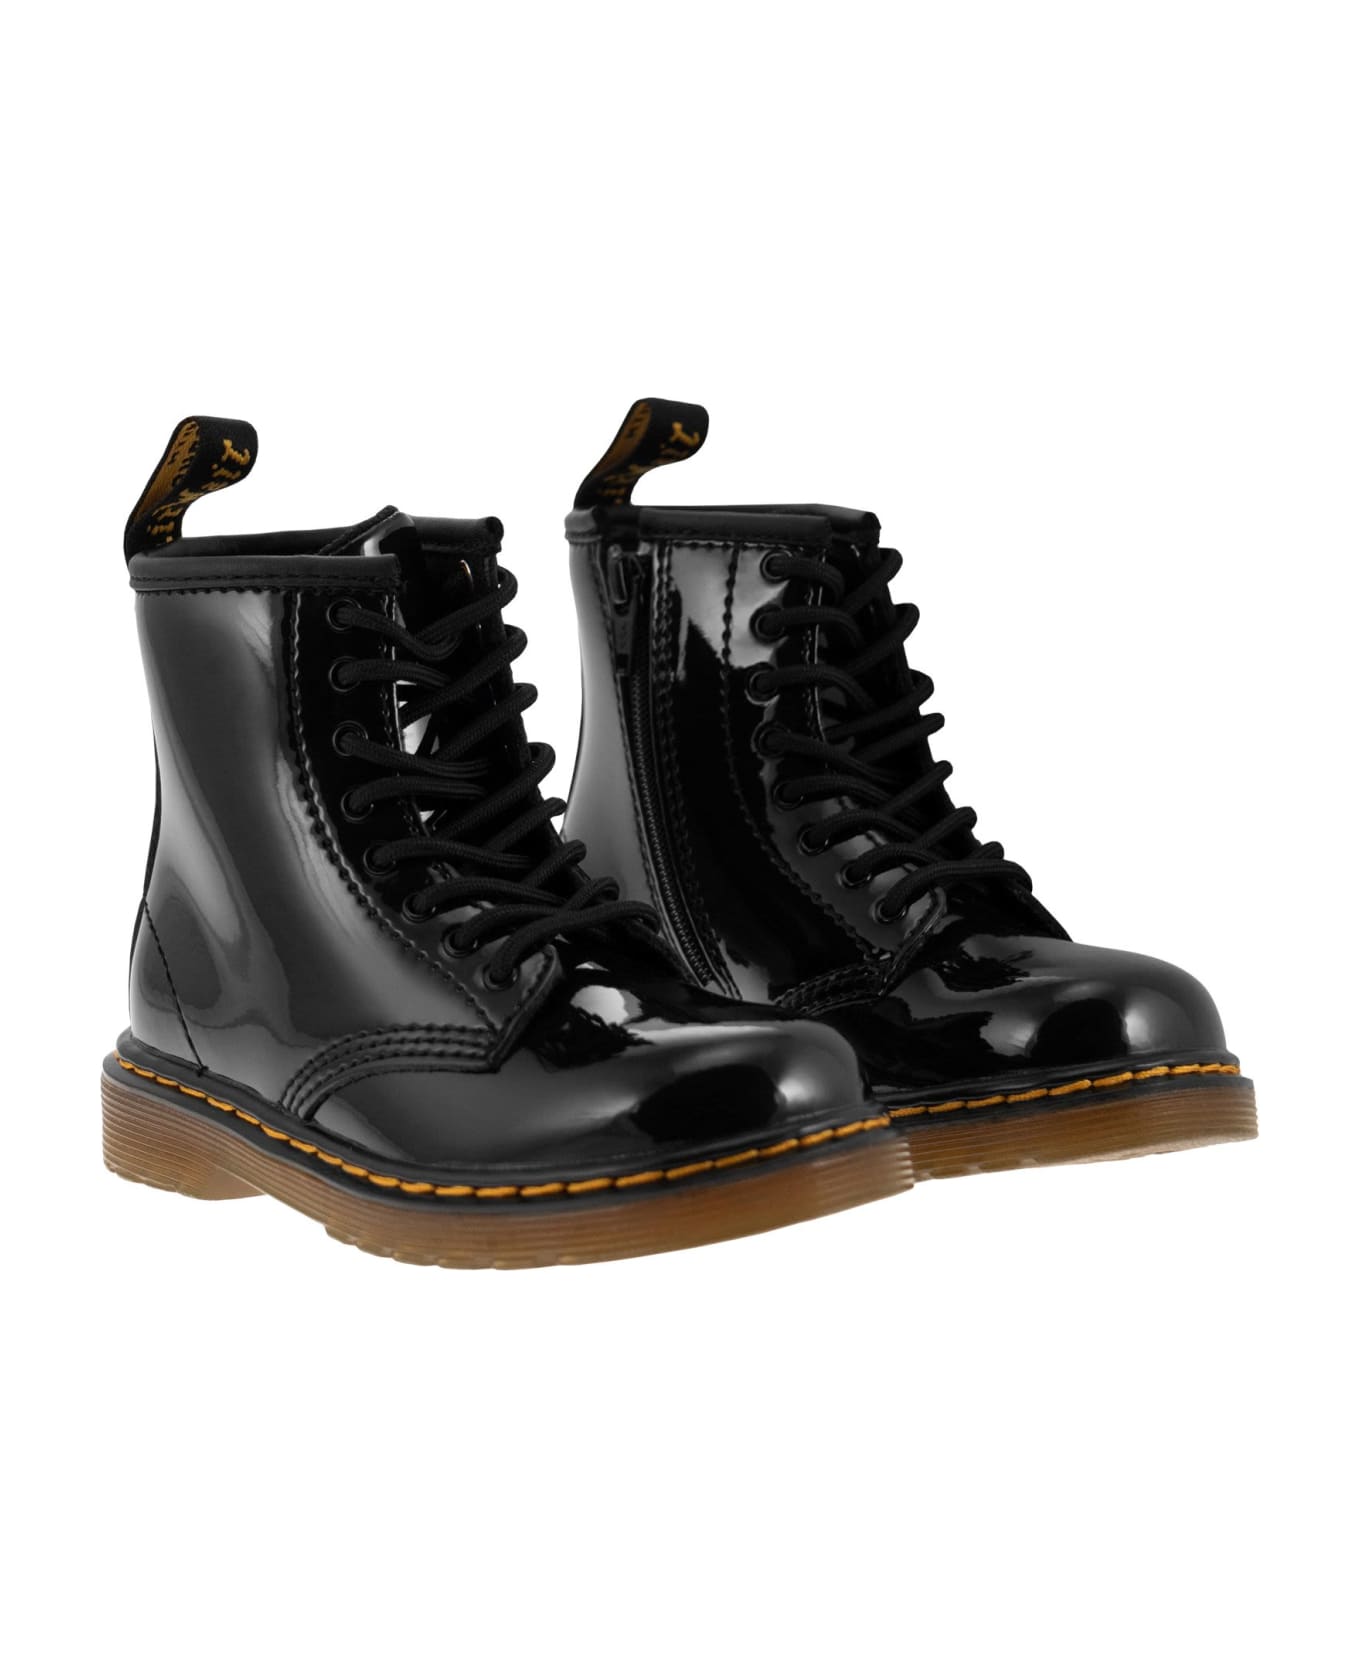 Dr. Martens 1460 - Patent Leather Lace-up Boots - Black